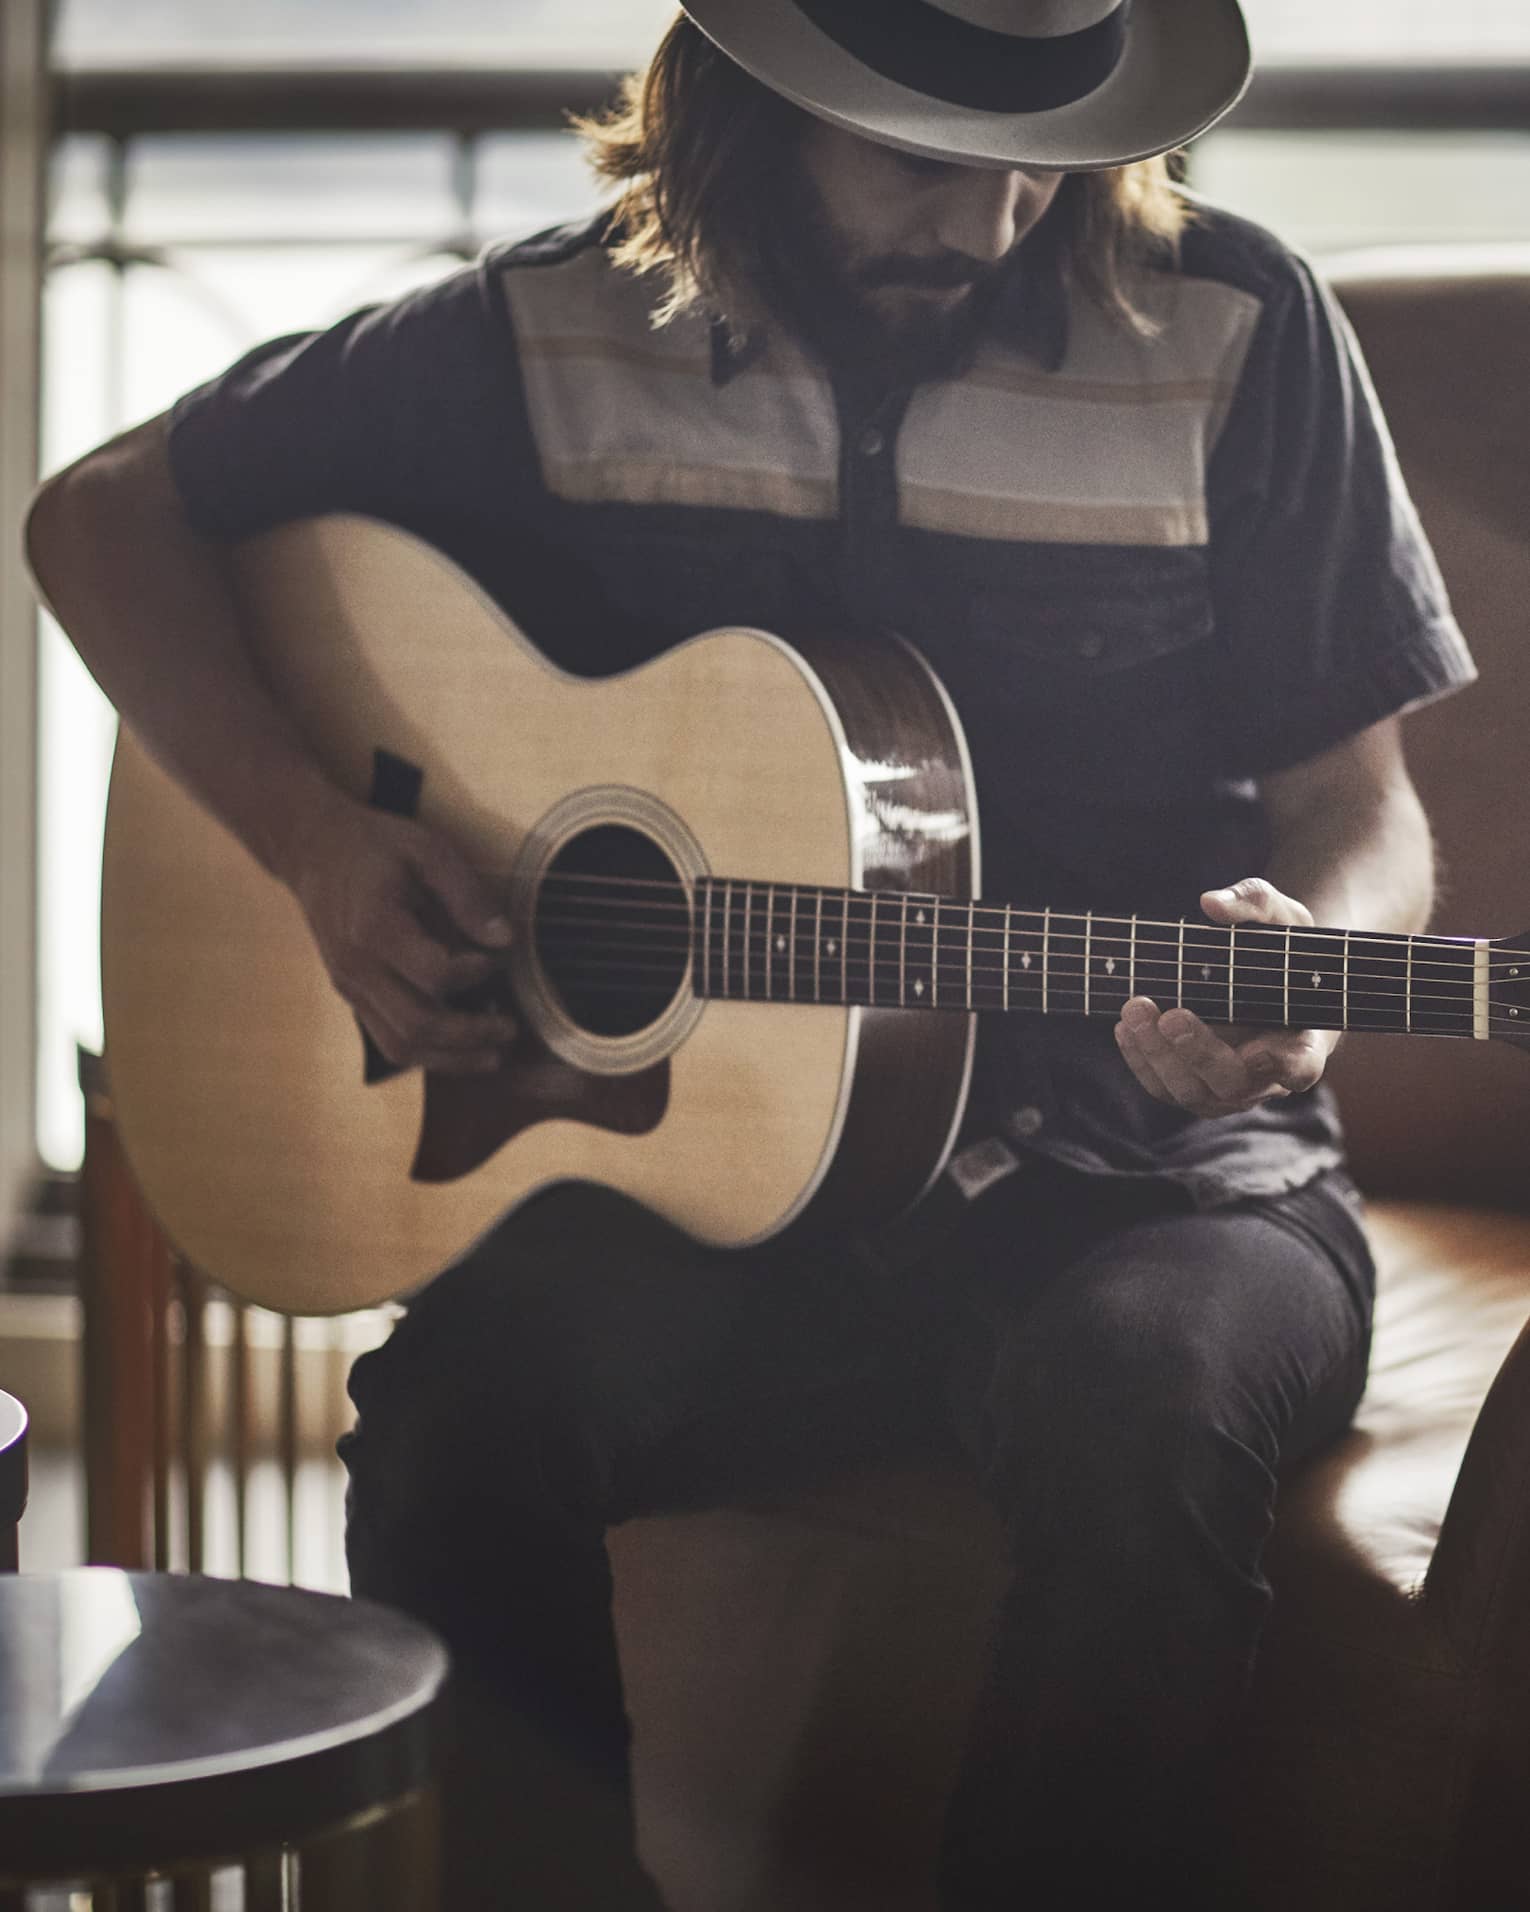 Guitar Concierge plays Taylor acoustic guitar on modern armchair